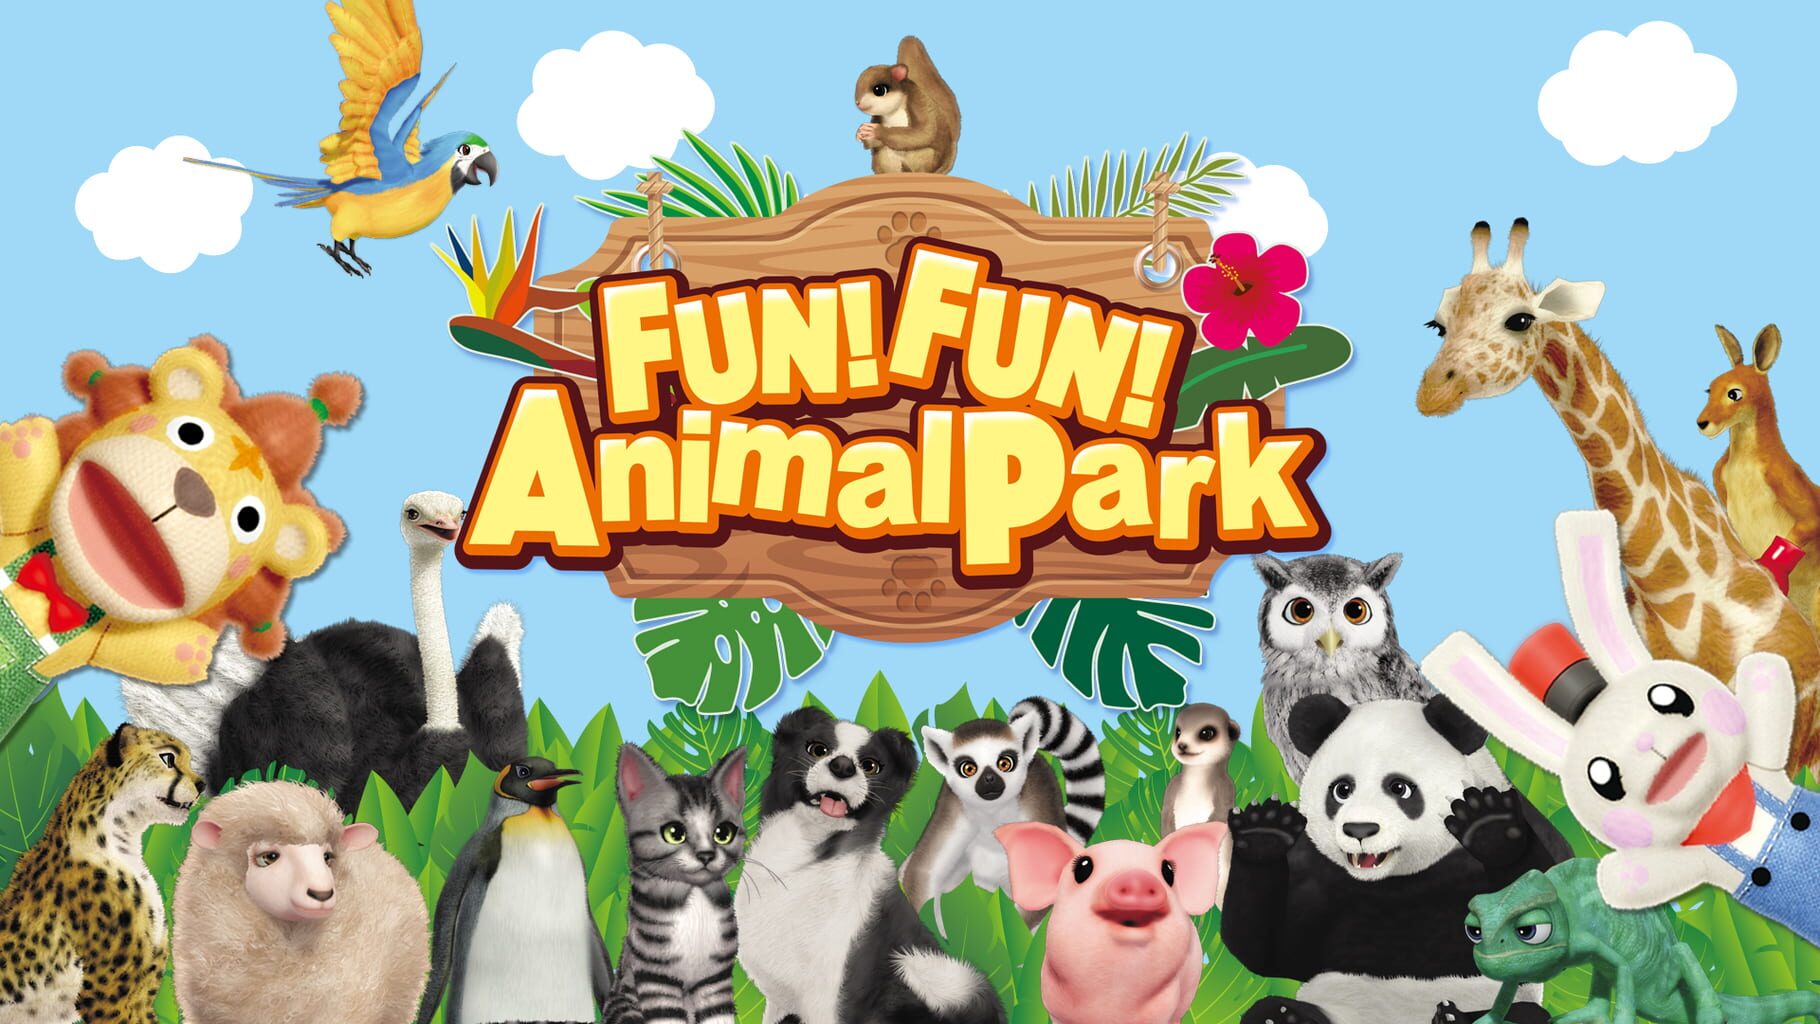 FUN! FUN! Animal Park artwork